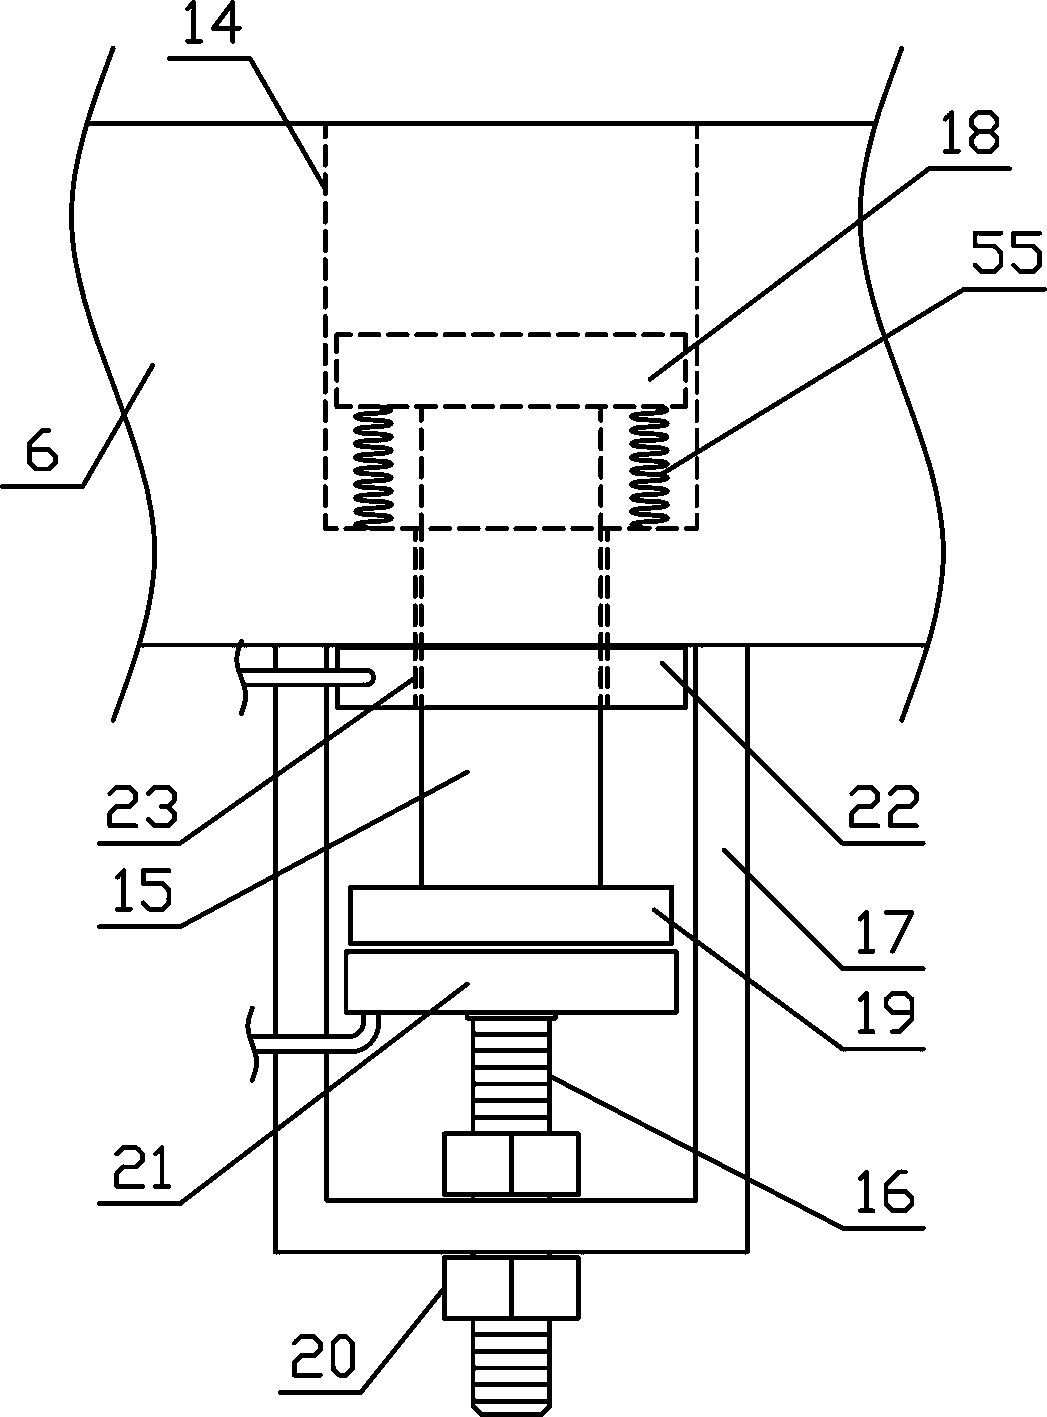 Sleeve column feeding and pressing mechanism